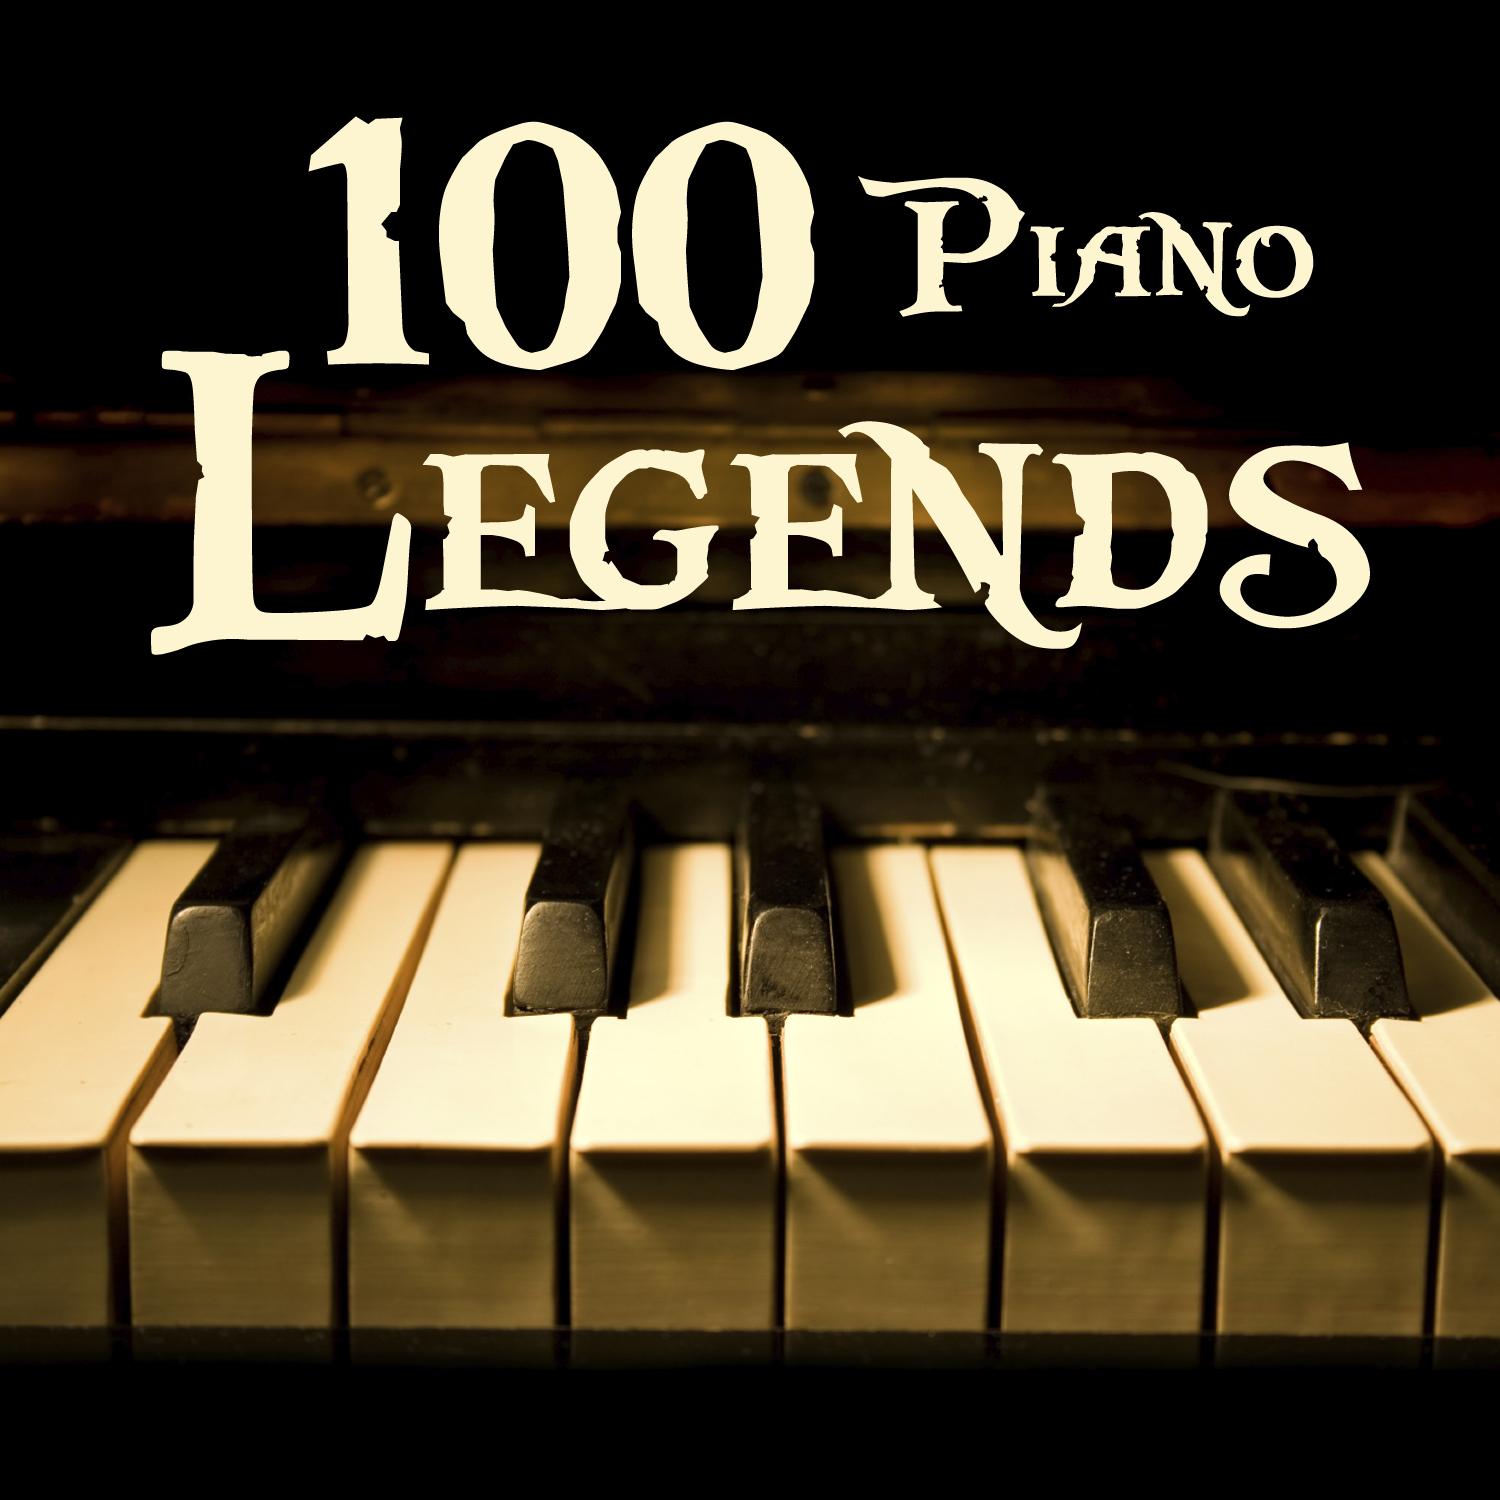 100 Piano Legends